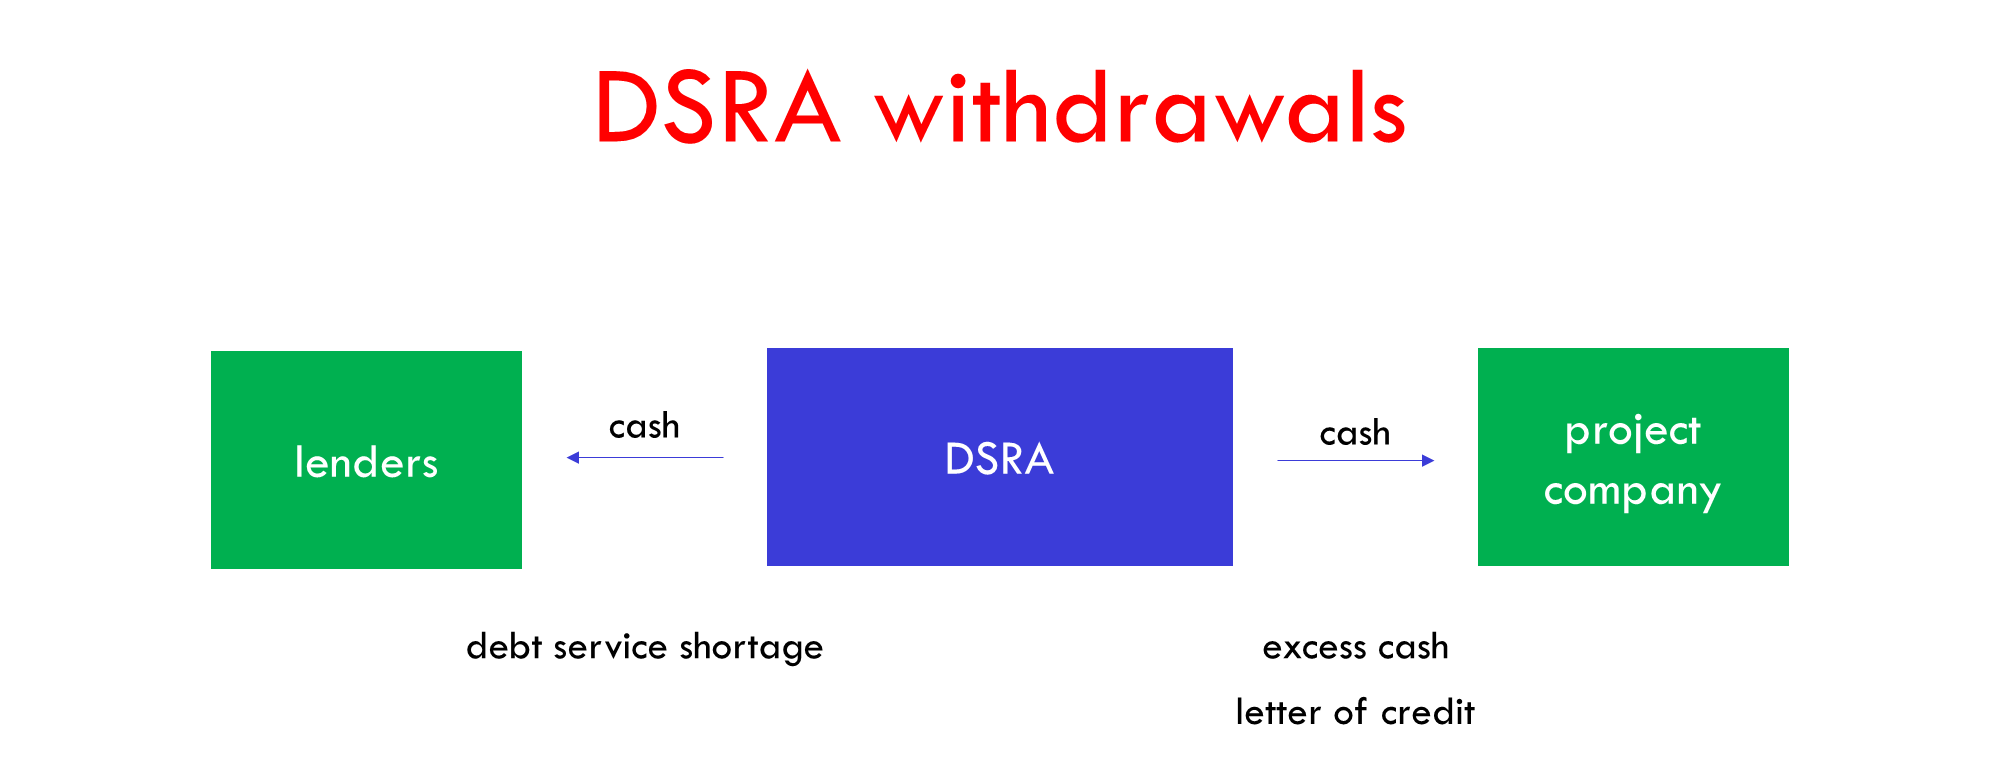 DSRA withdrawals